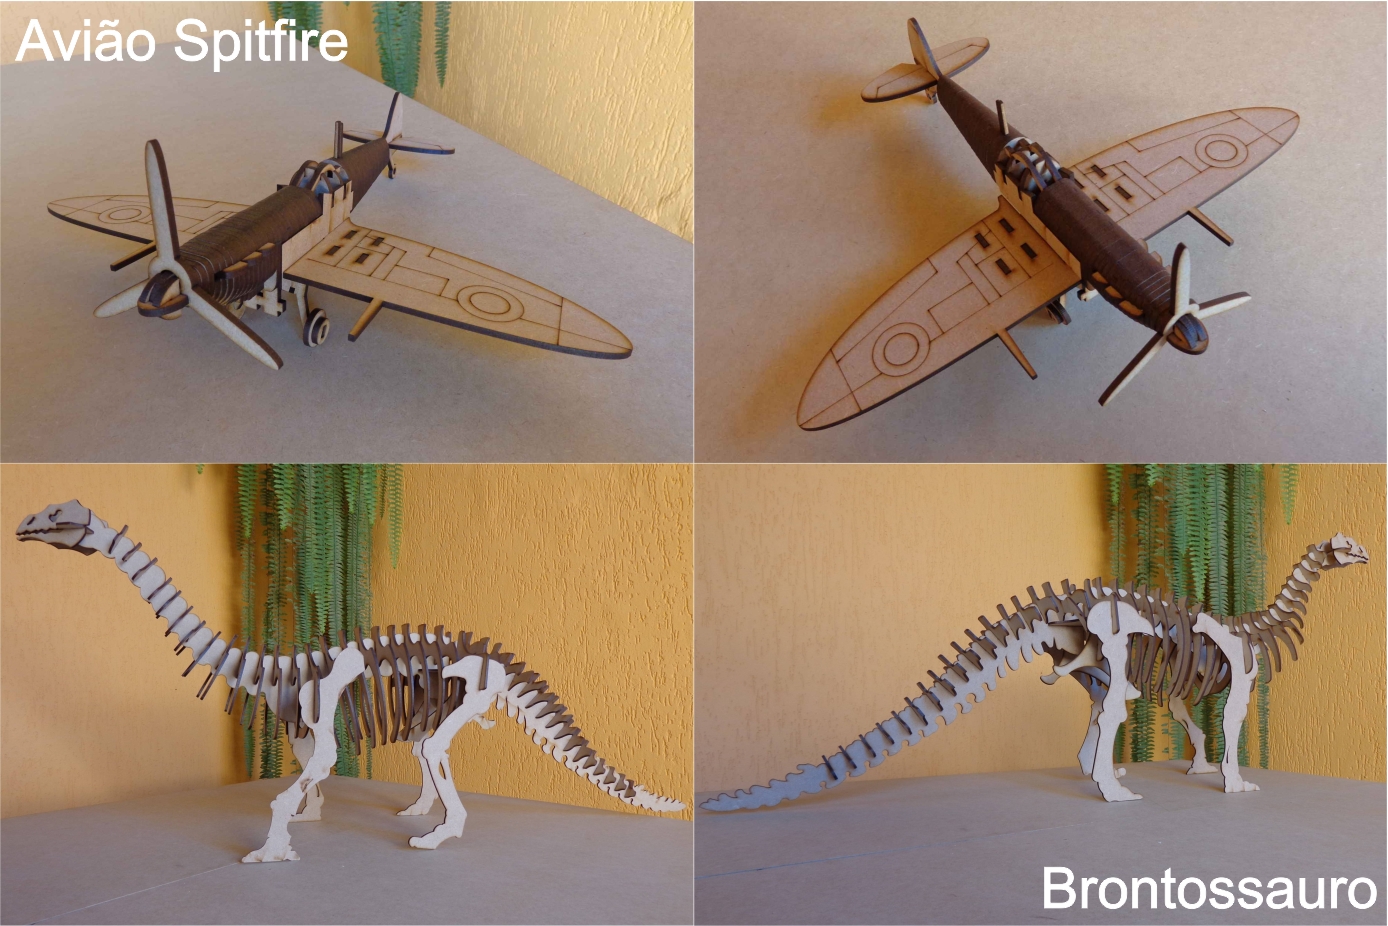 Spitfire & Brontosaurus